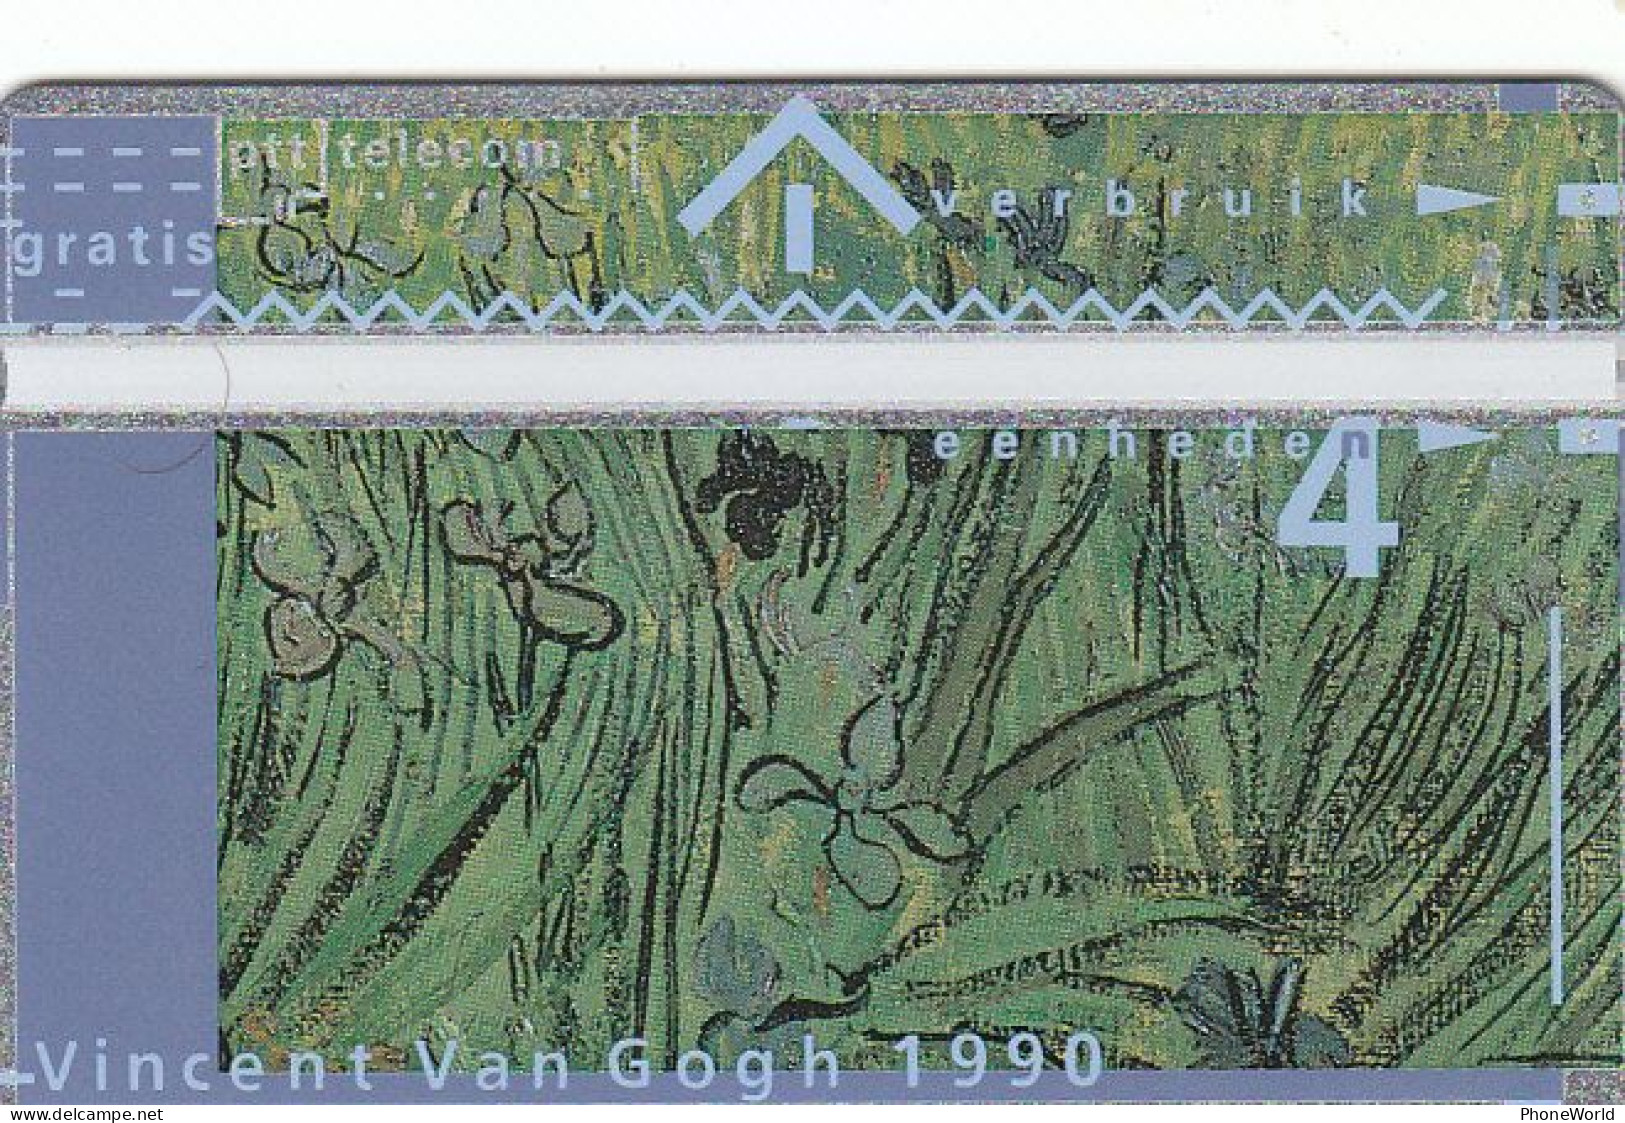 KPN, Paintings, Vincent Van Gogh 1990, #003A, Mint - öffentlich